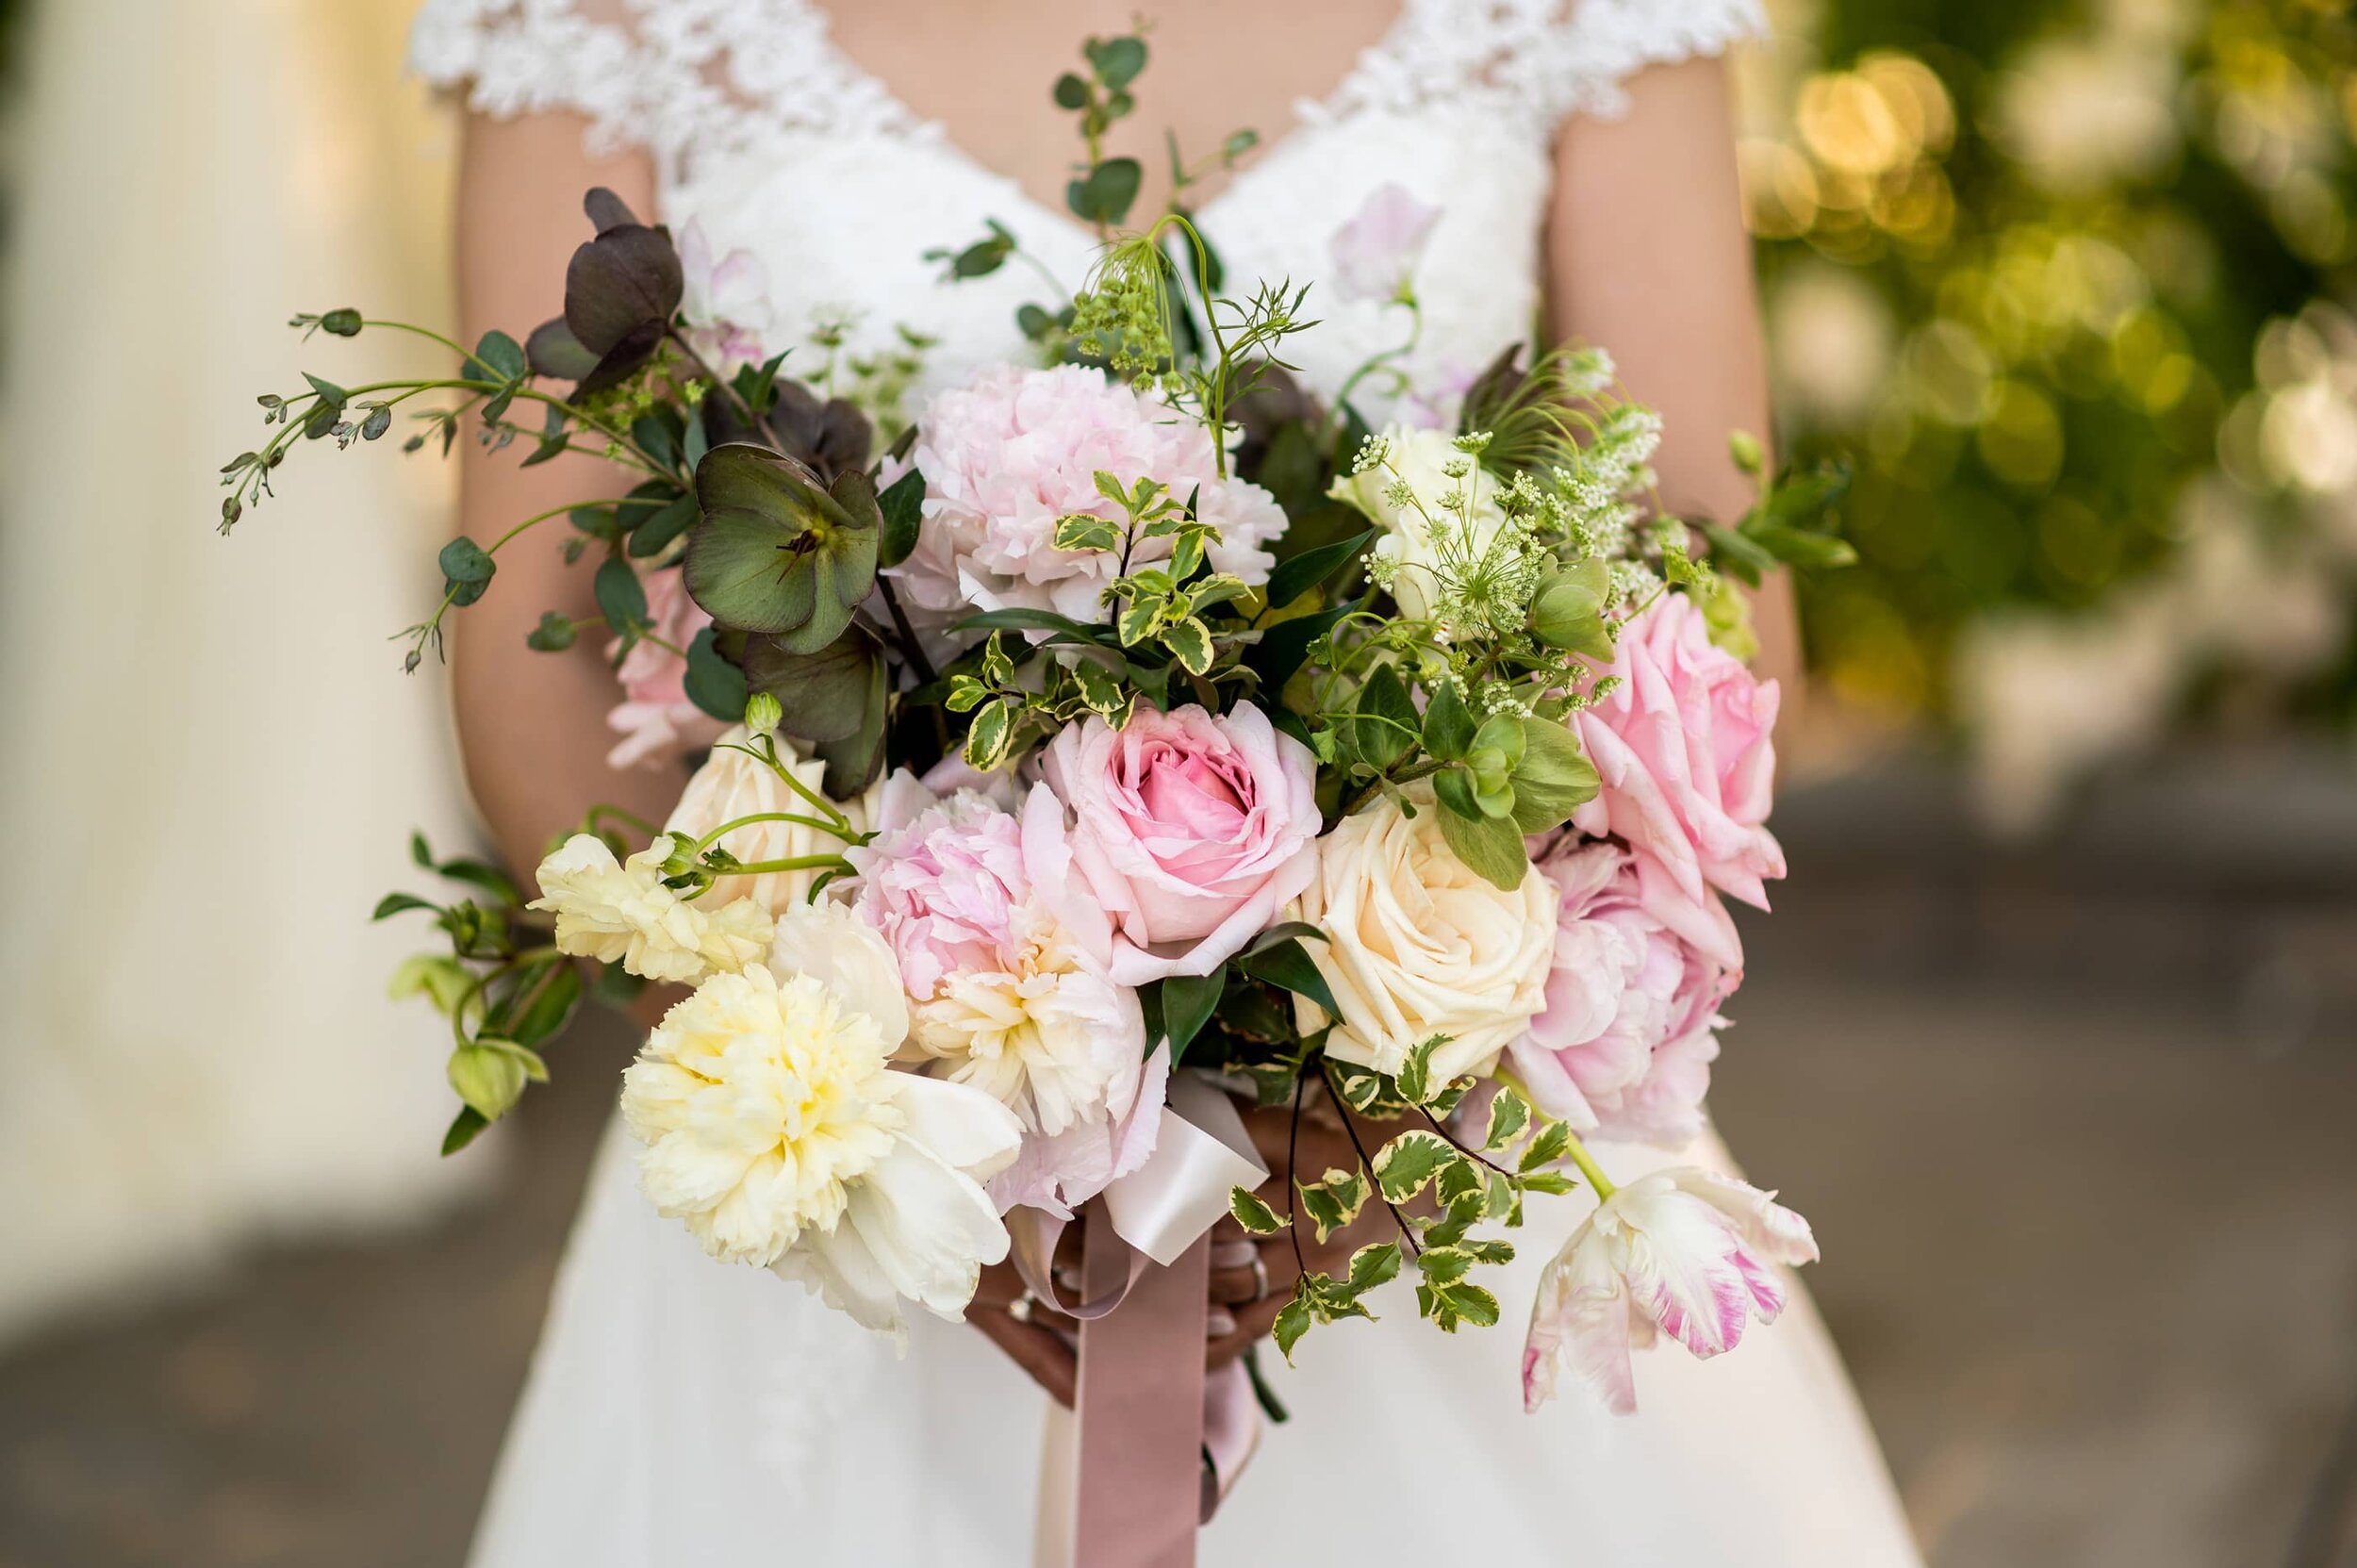 Detail of bride holding wedding bouquet